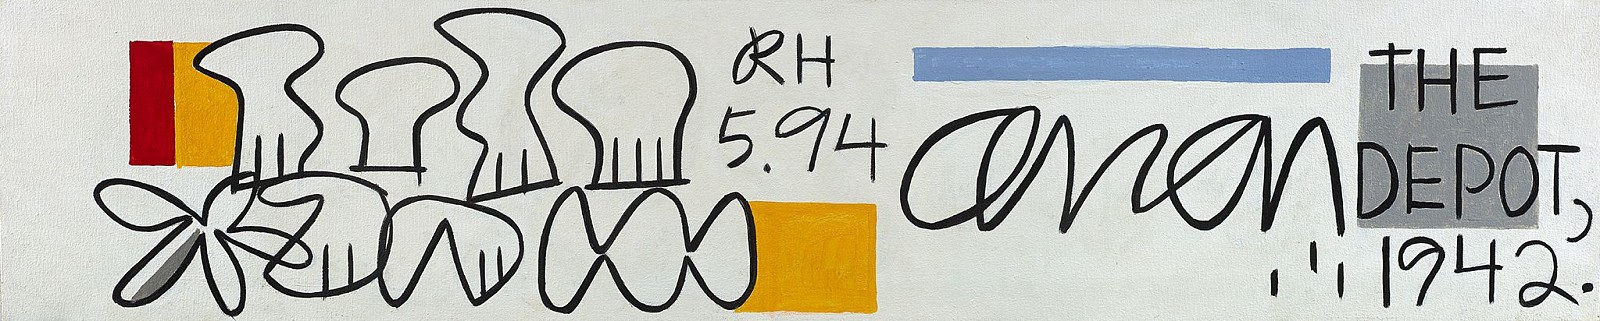 Raymond Hendler, The Depot 1942, 1994
Acrylic on canvas, 12 x 60 in. (30.5 x 152.4 cm)
HEN-00184